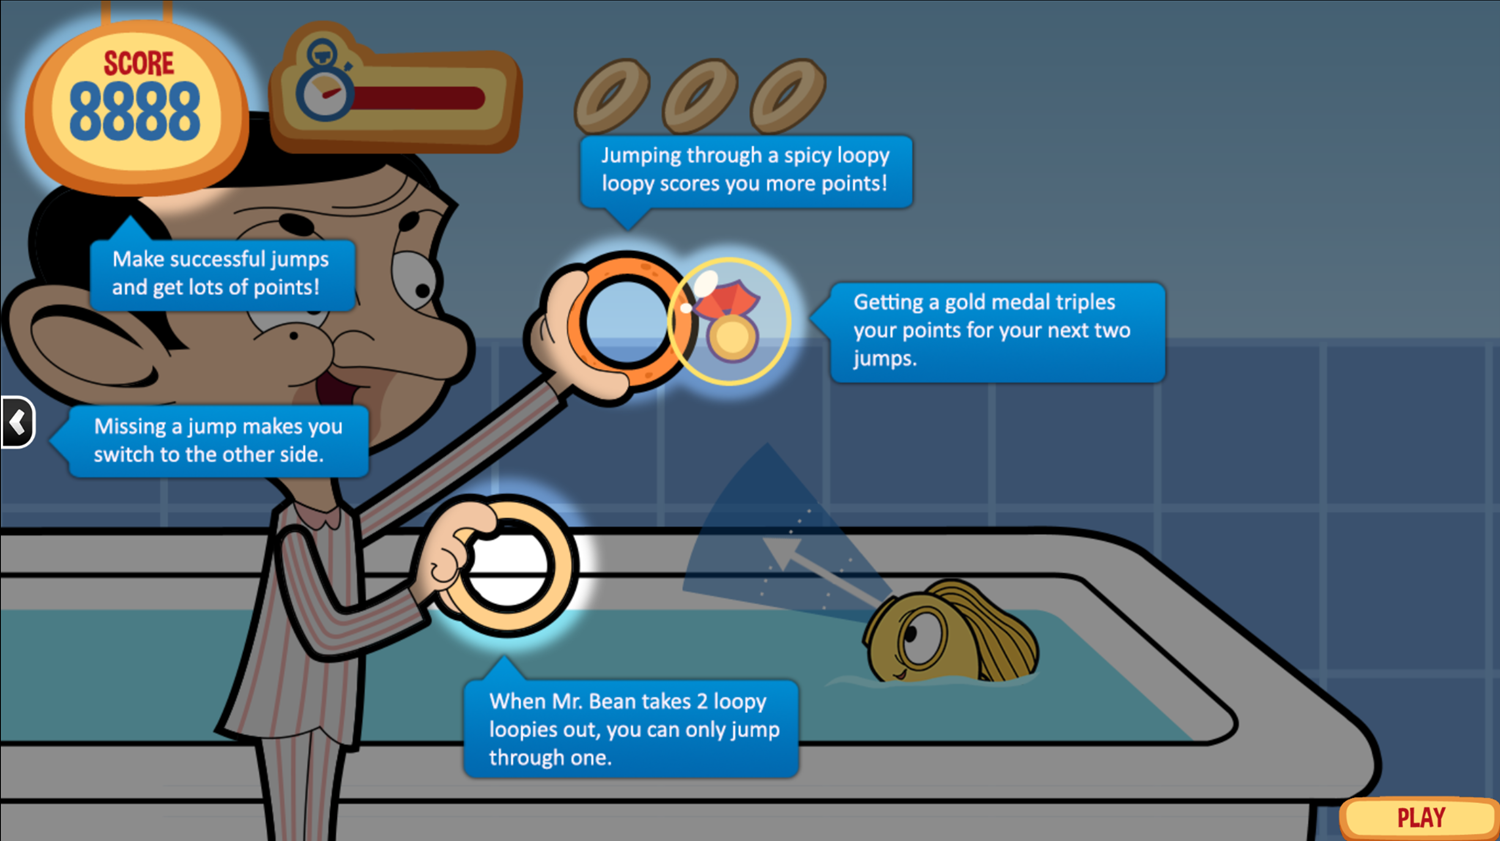 Mr. Bean Goldfish Loopy Loopy Instructions Screenshot.